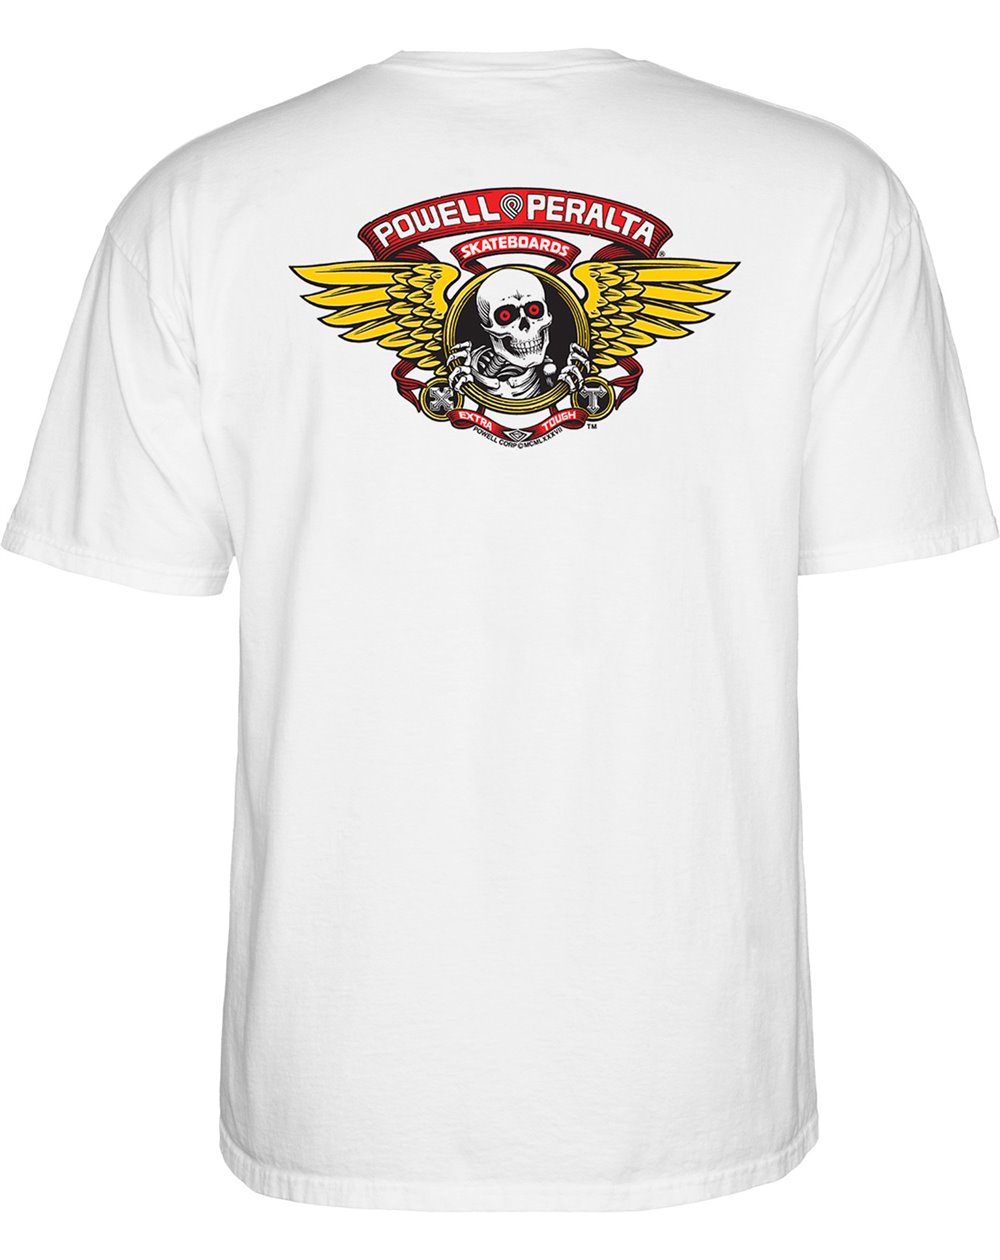 Powell Peralta Men's T-Shirt Winged Ripper White